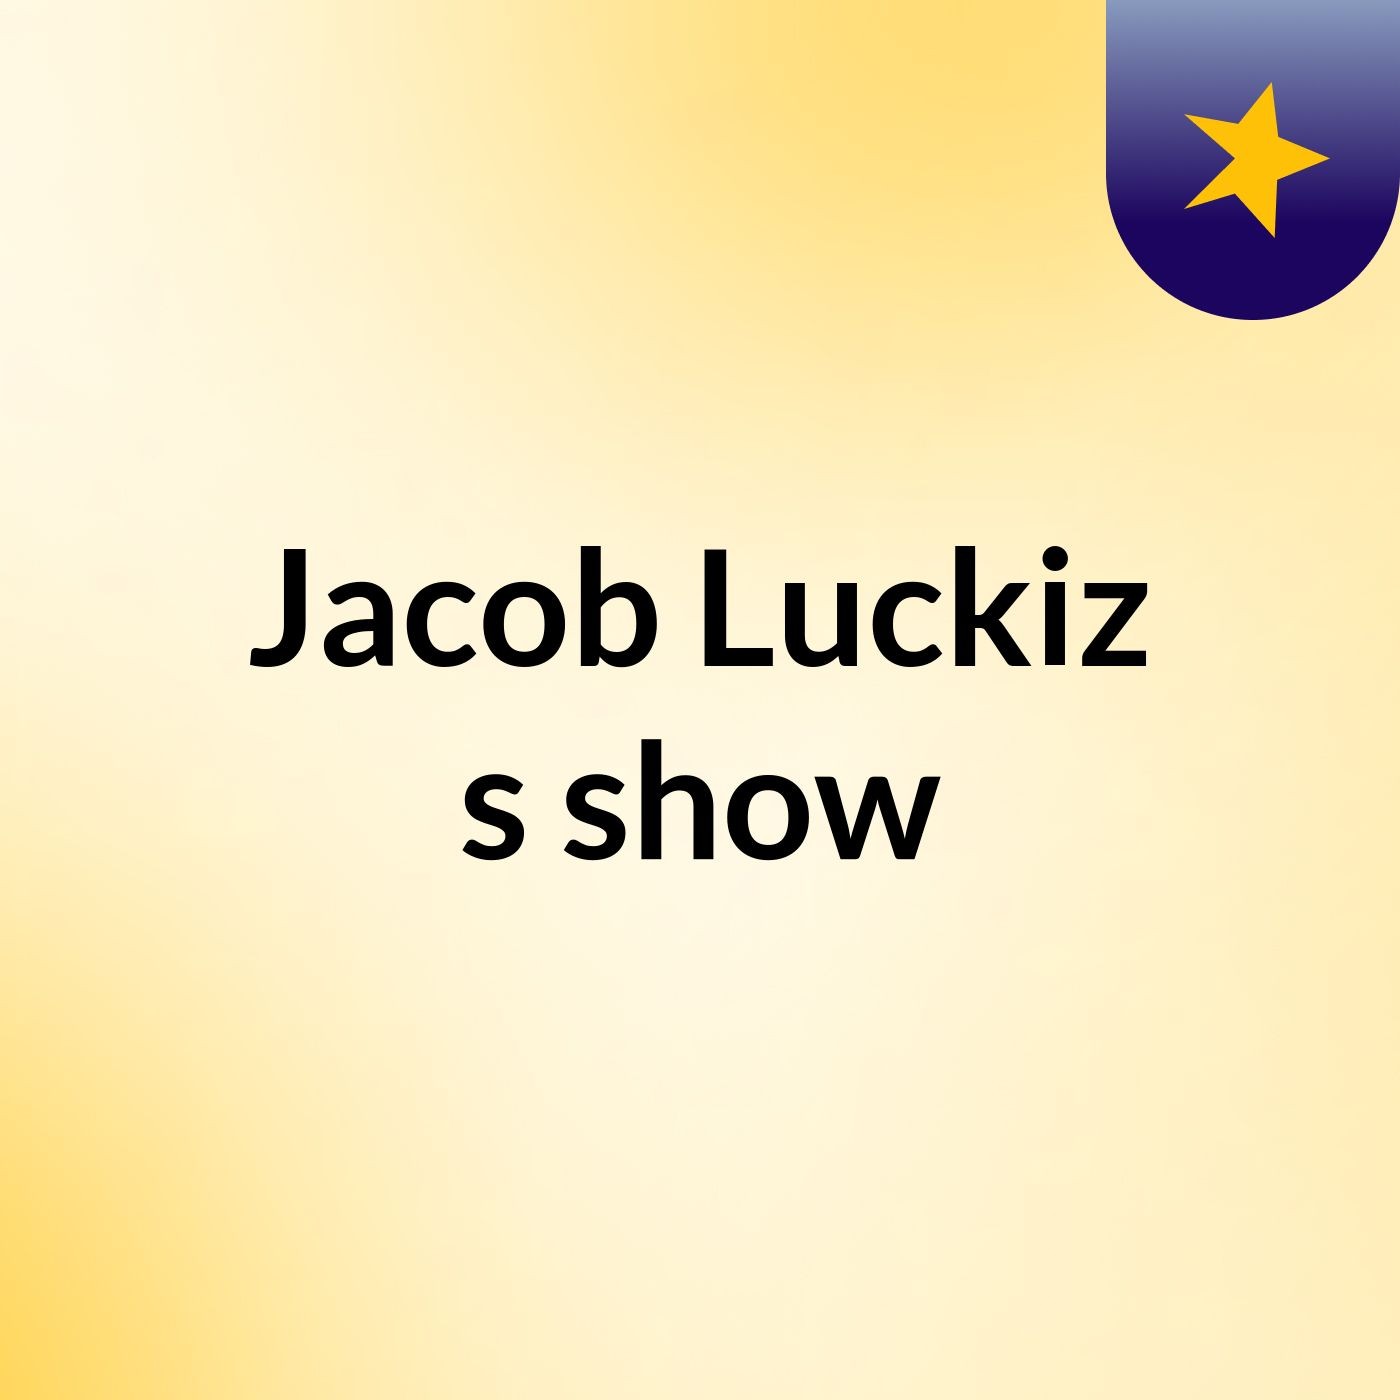 Episode 5 - Jacob Luckiz's show